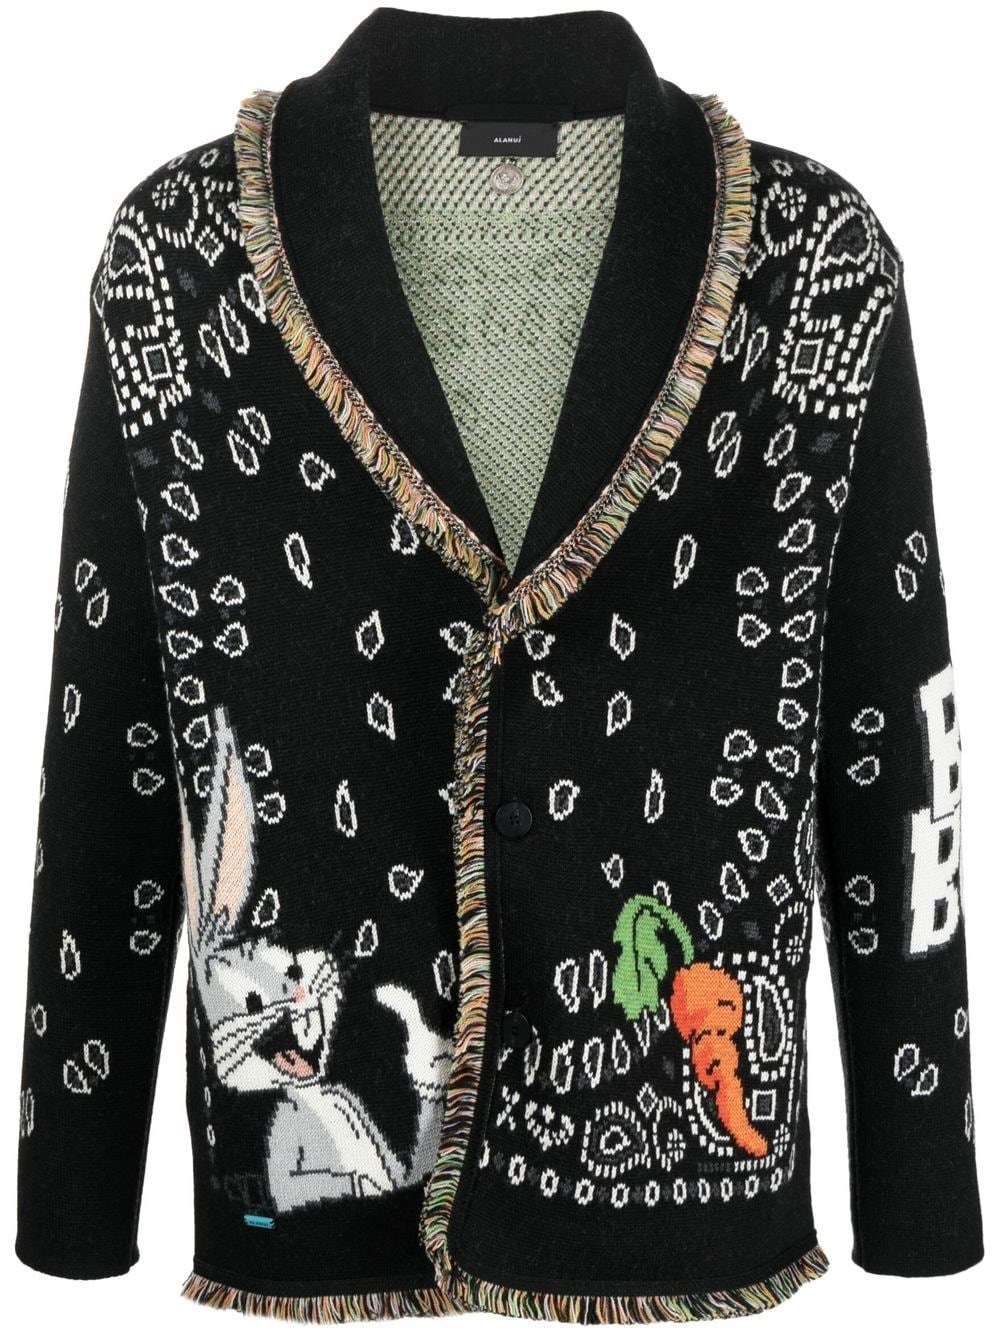 Alanui Bugs Bunny Virgin Wool Knit Cardigan In Black